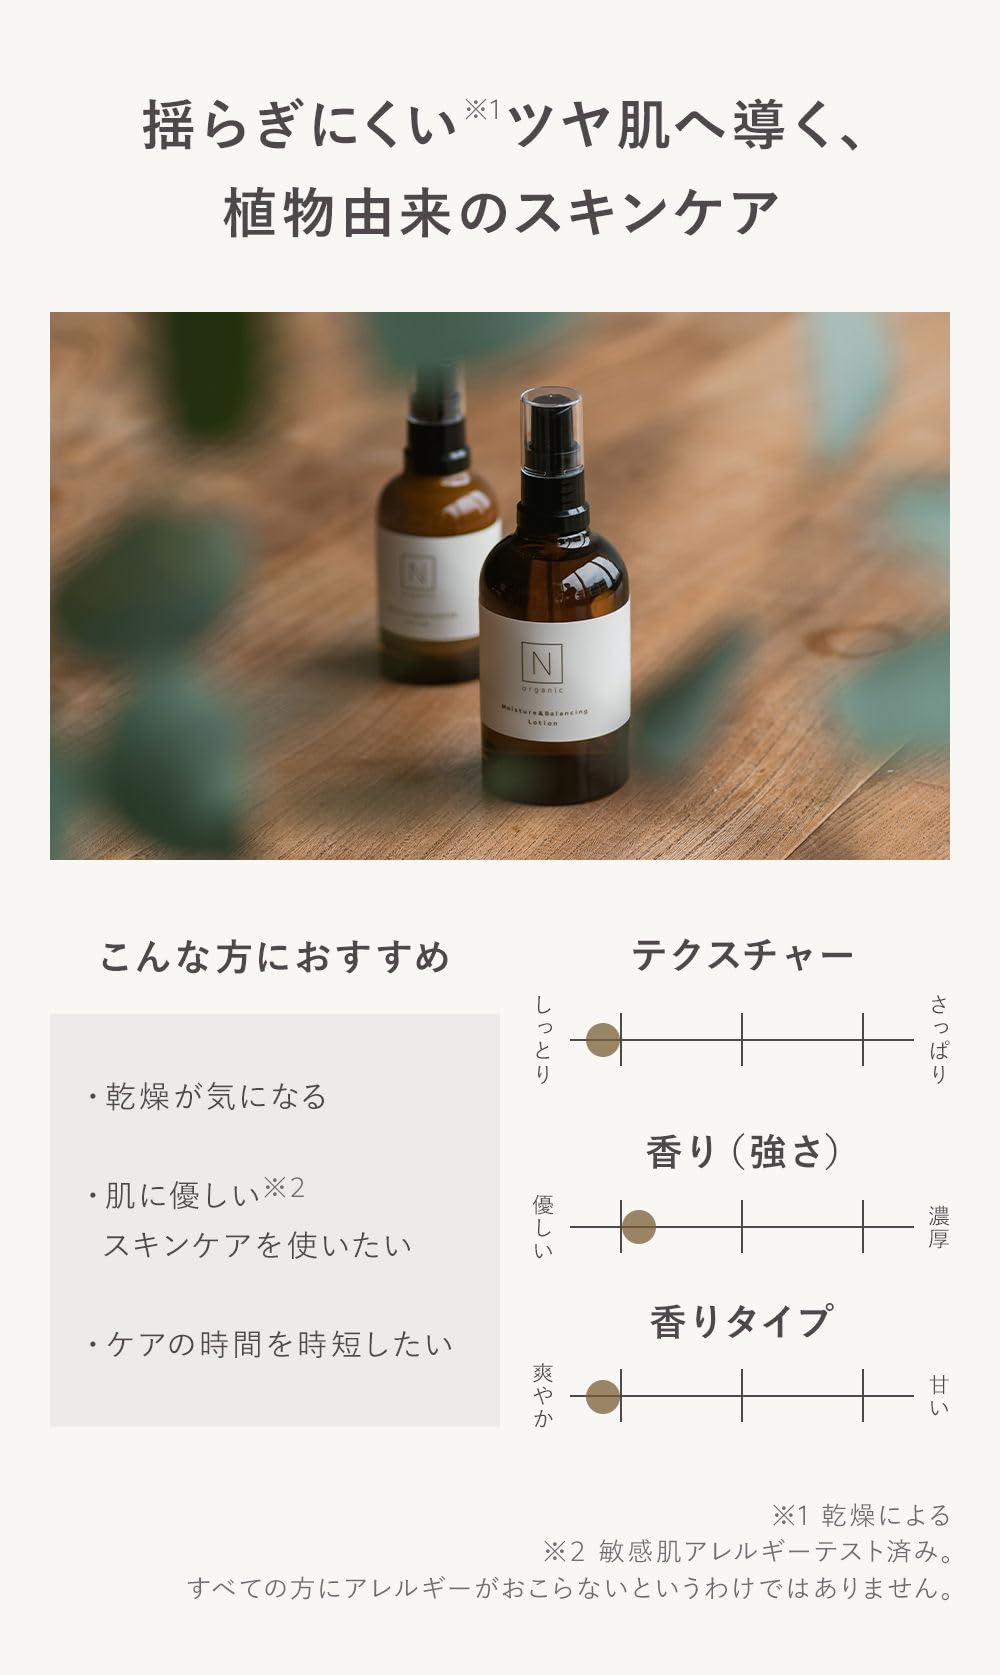 Deonatulle Sarasara Cream Armpits Direct Nuri Antiperspirant Japan 45G (1) - YOYO JAPAN